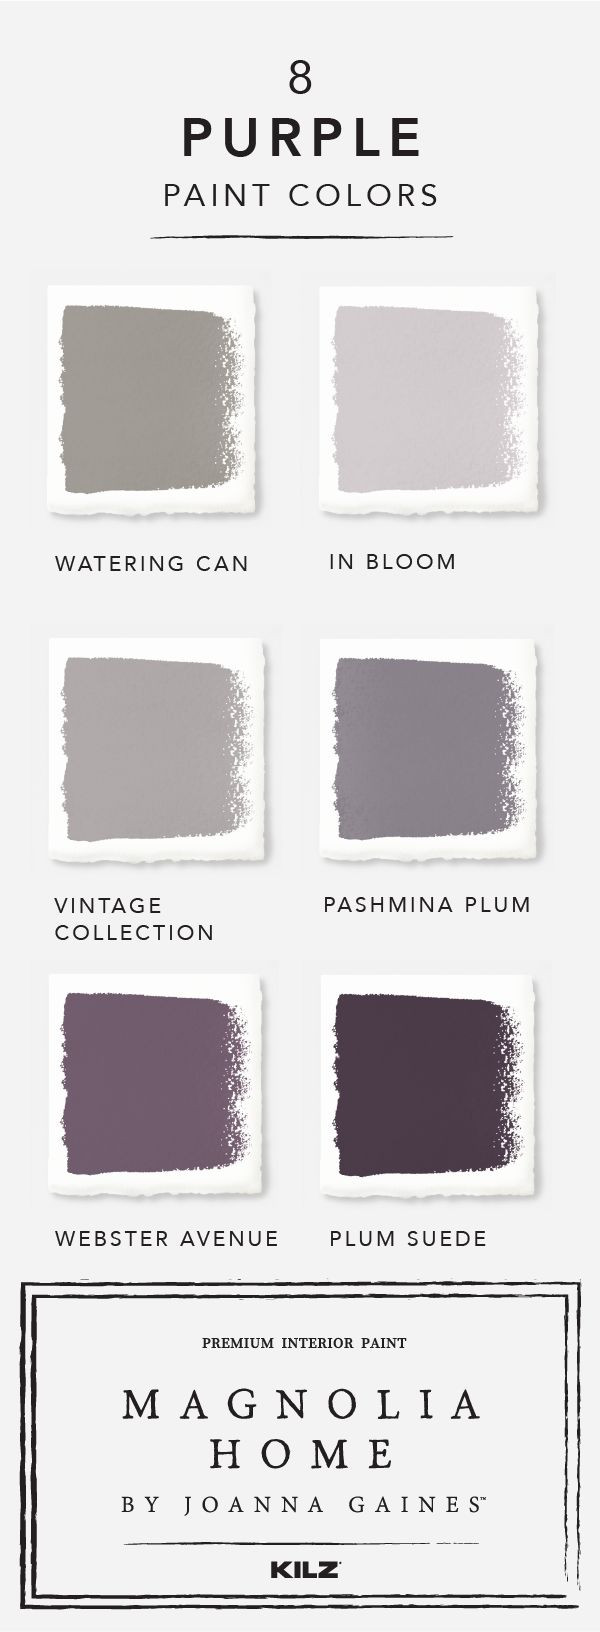 Best ideas about Magnolia Paint Colors
. Save or Pin Best 25 Magnolia paint ideas on Pinterest Now.